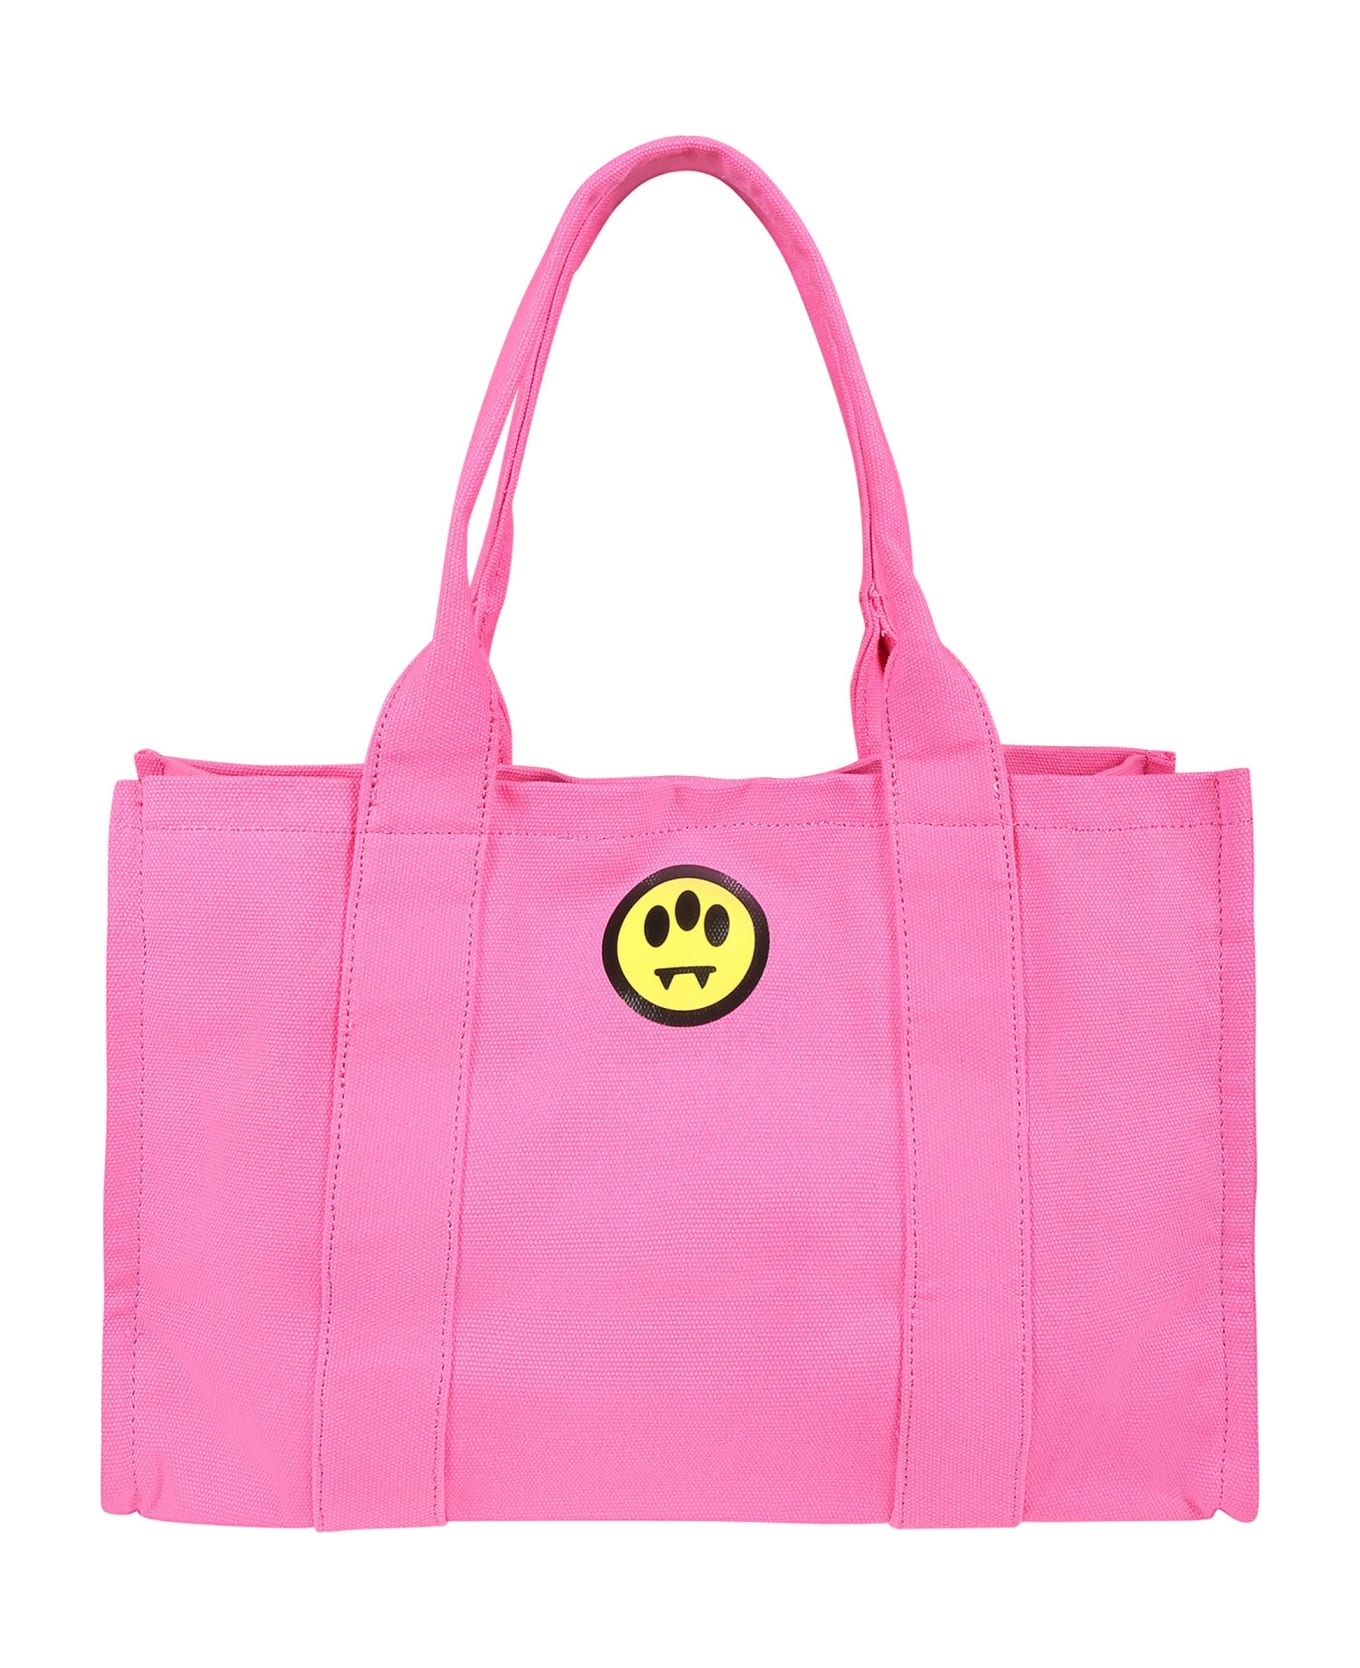 Barrow Fuchsia Bag For Girl With Logo And Smiley - Fuchsia